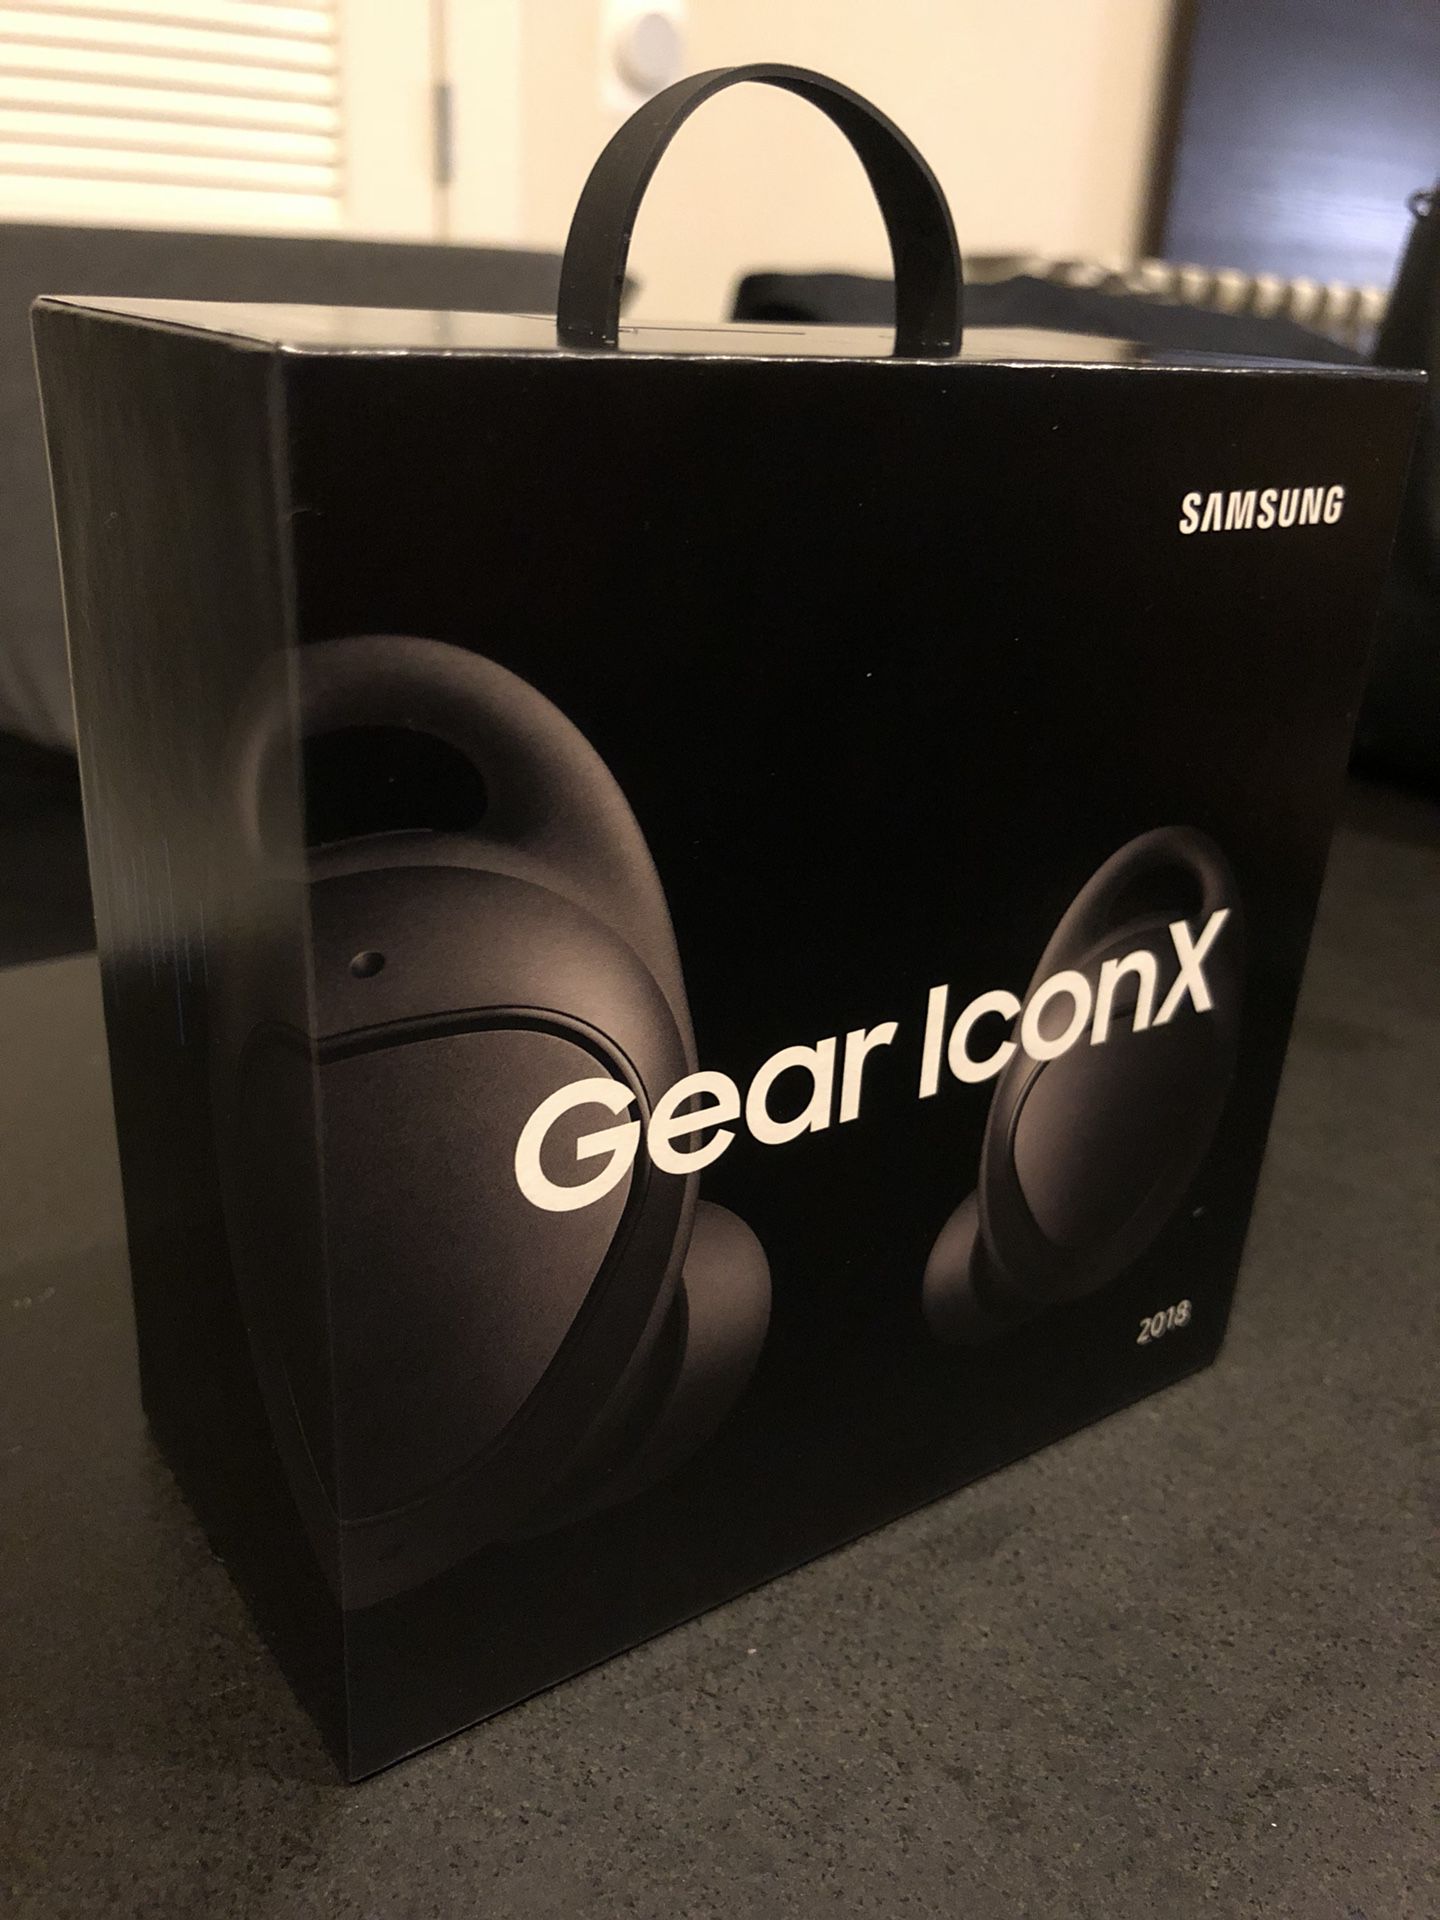 Samsung Gear IconX 2018 Bluetooth Earbuds *Unopened*